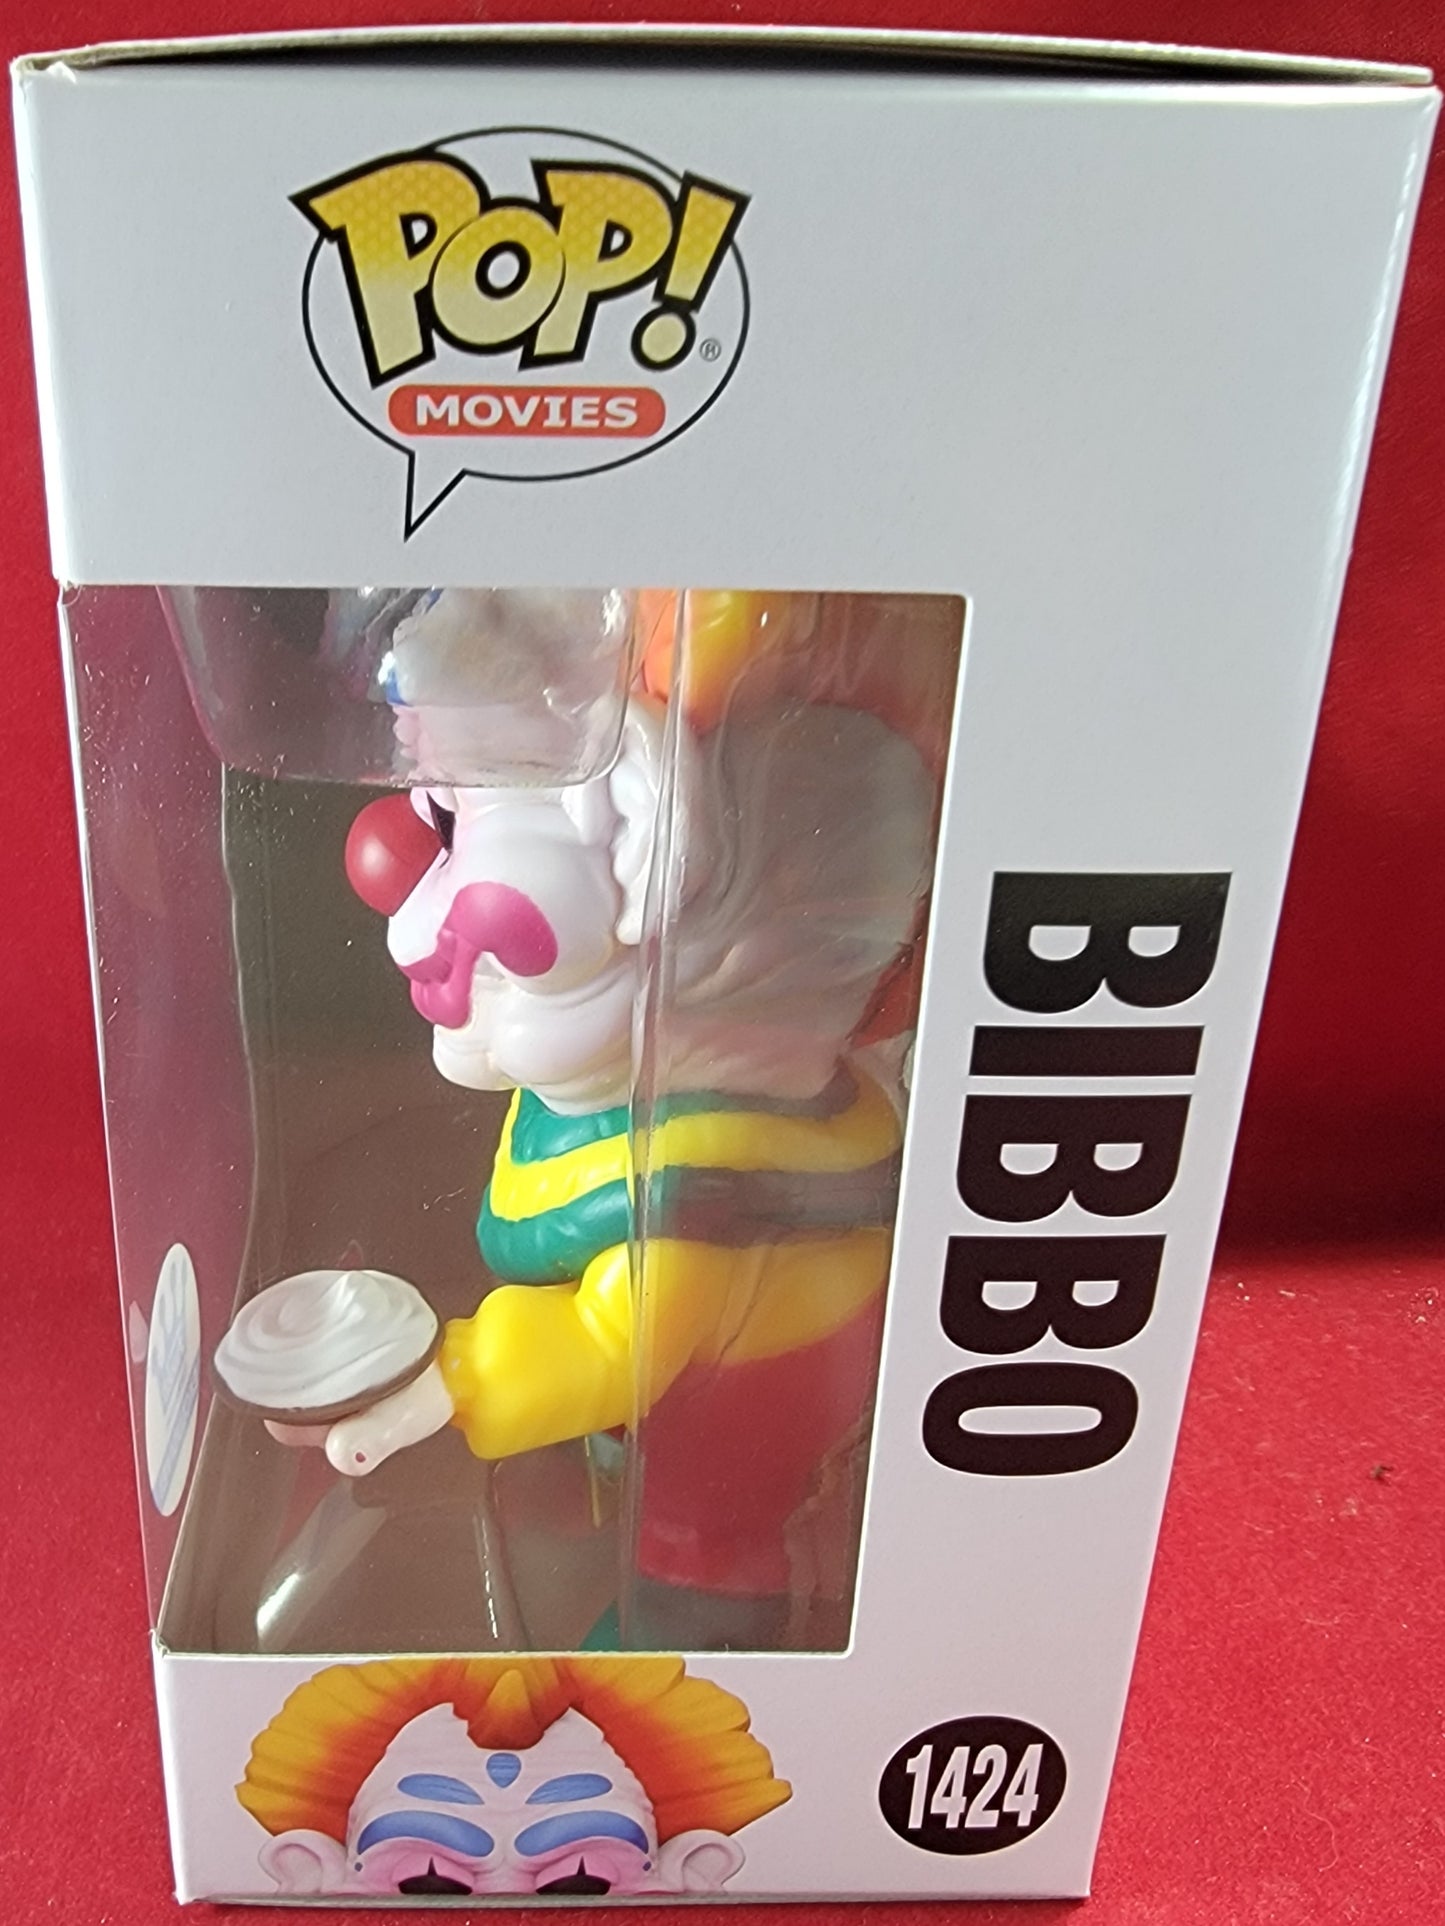 Bibbo funko exclusive # 1424 (nib)
With pop protector